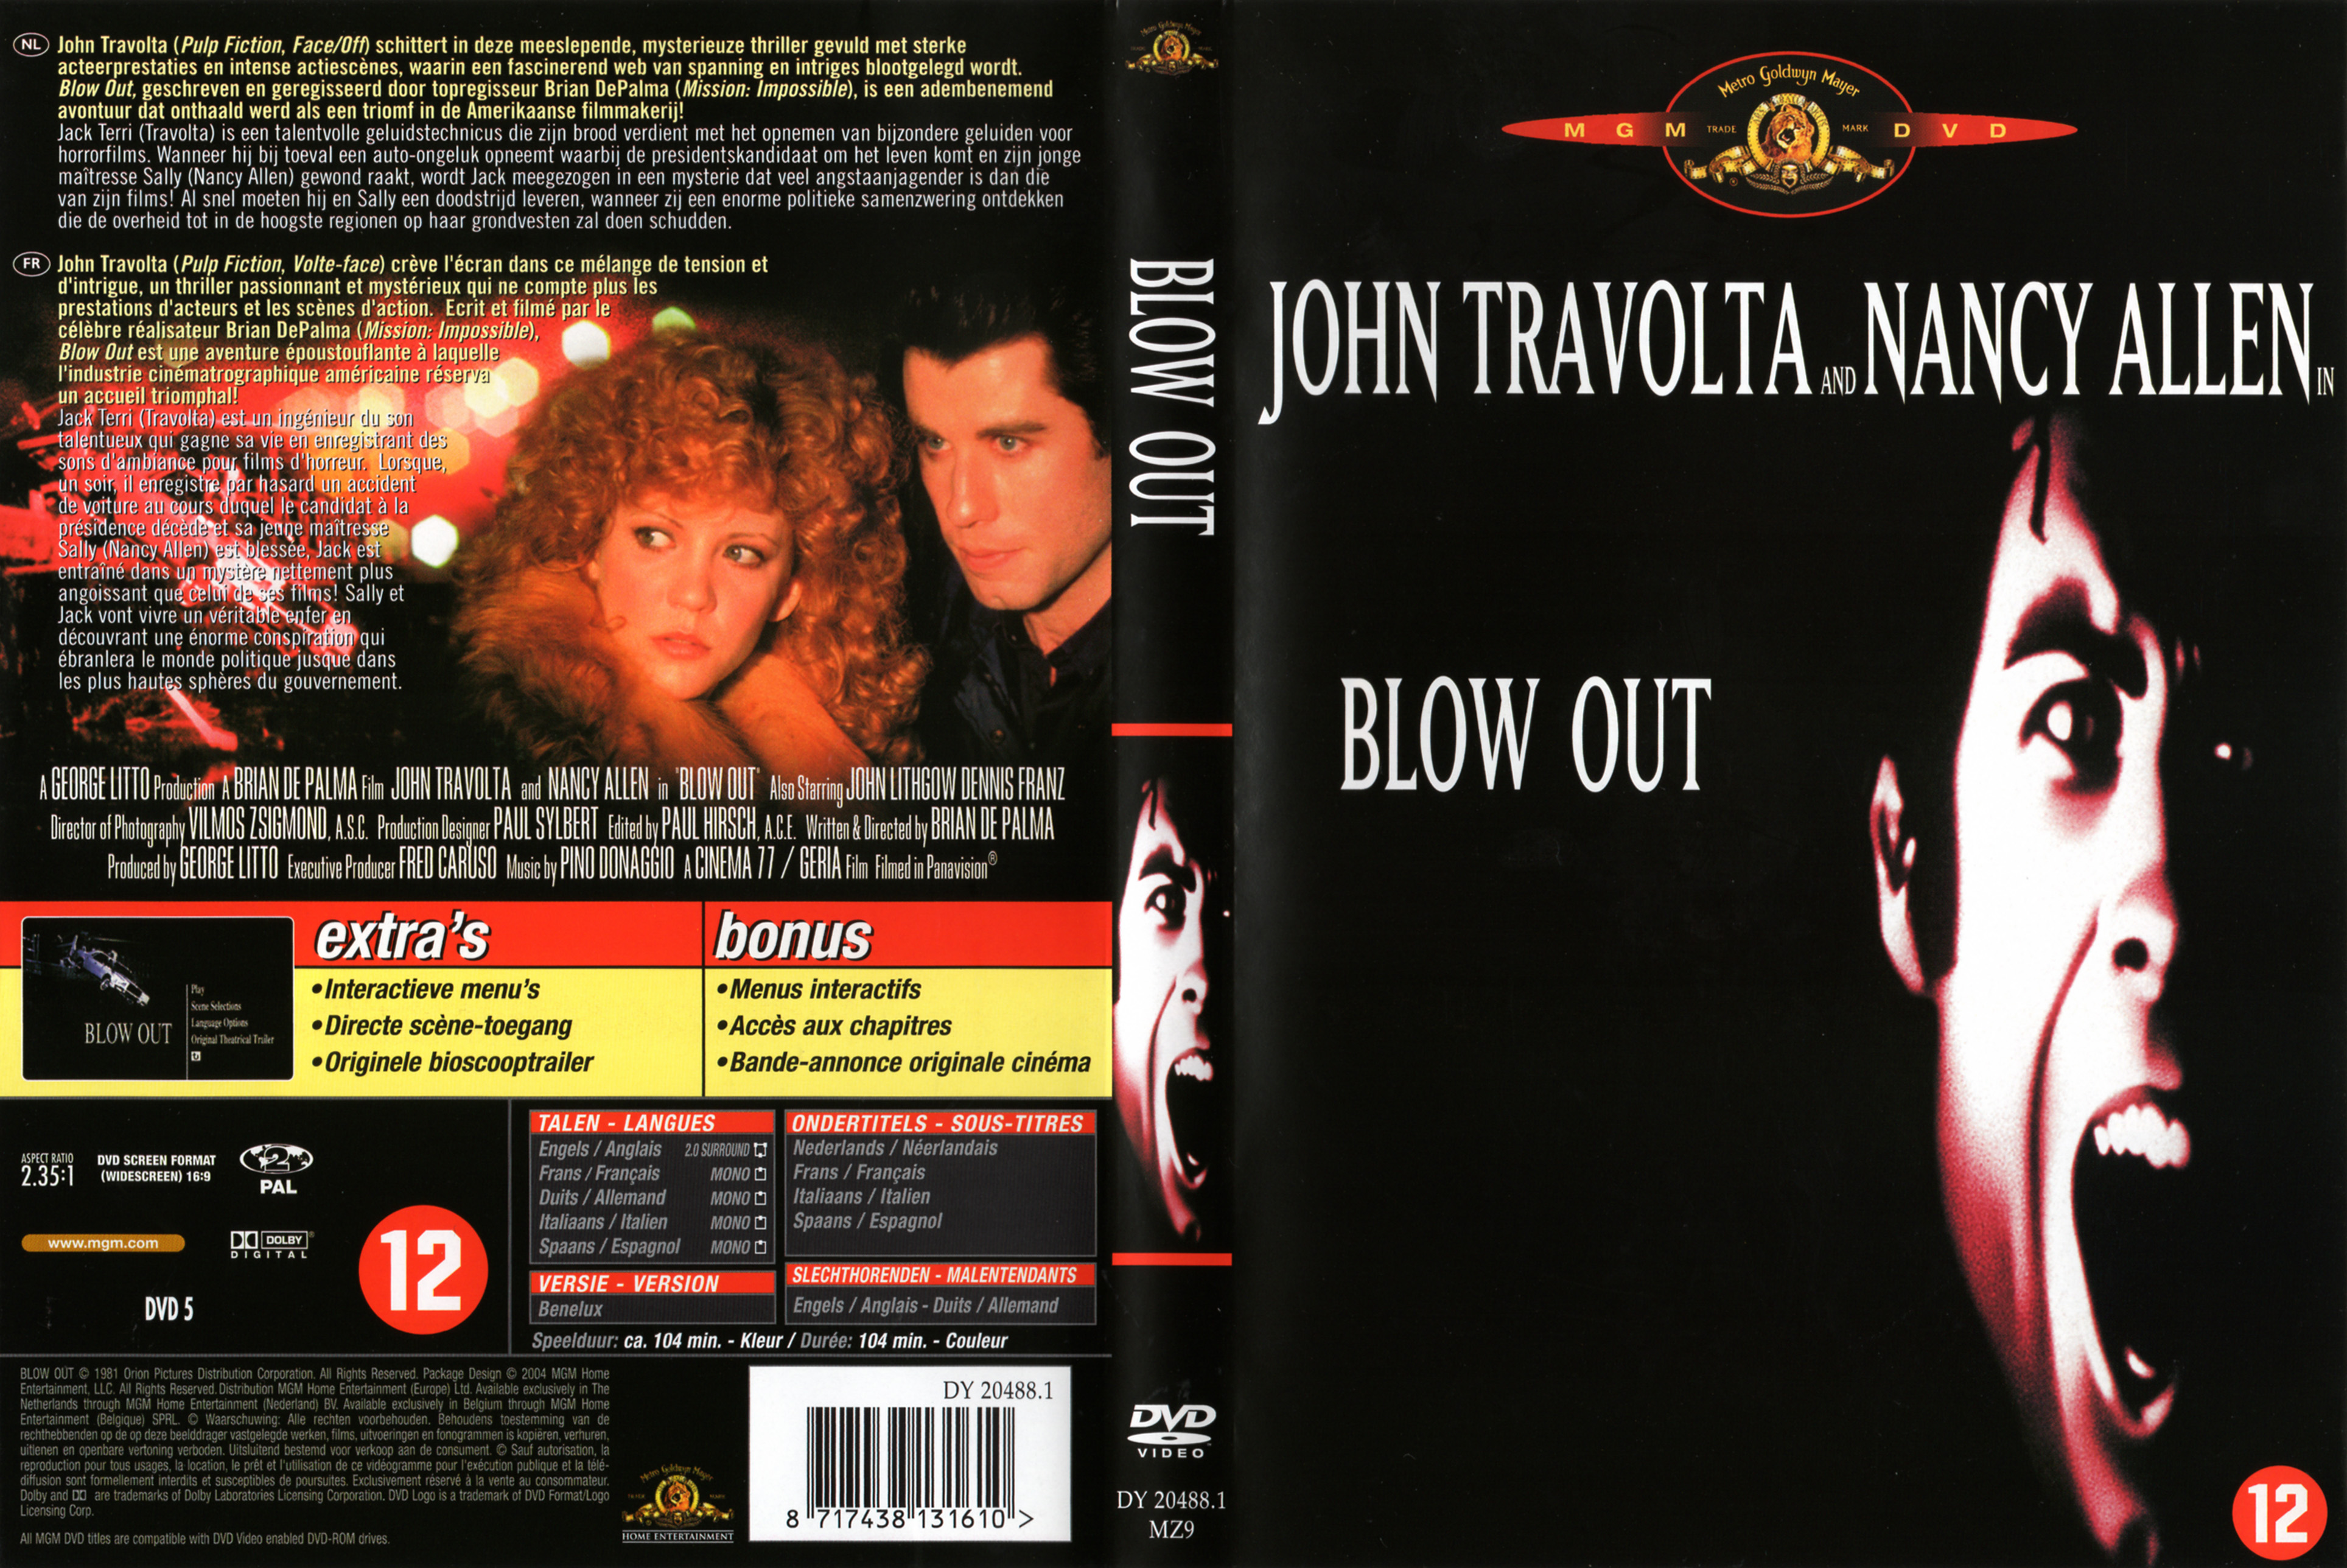 Jaquette DVD Blow out v2